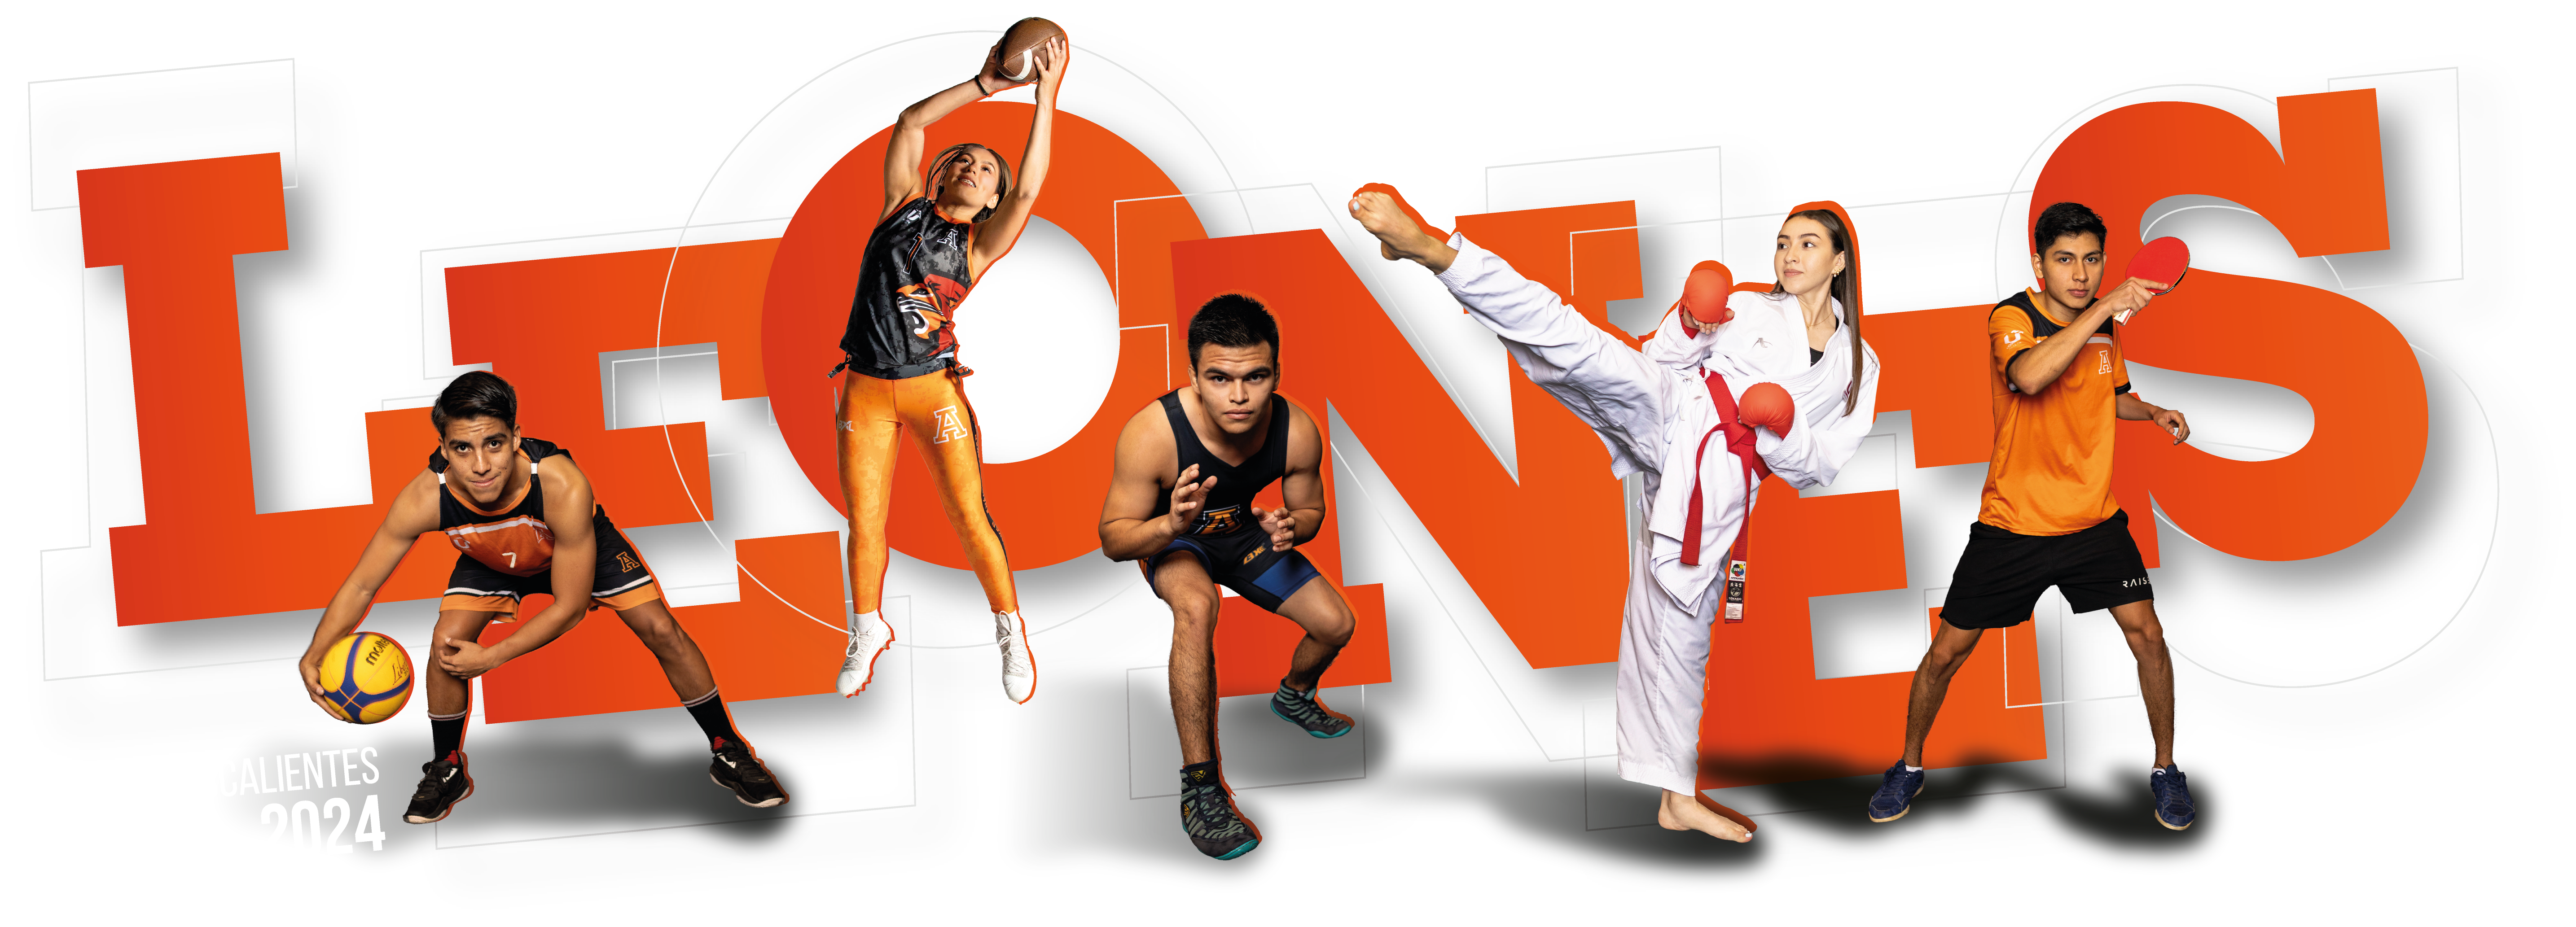 Universiada_2024_LP-Logo